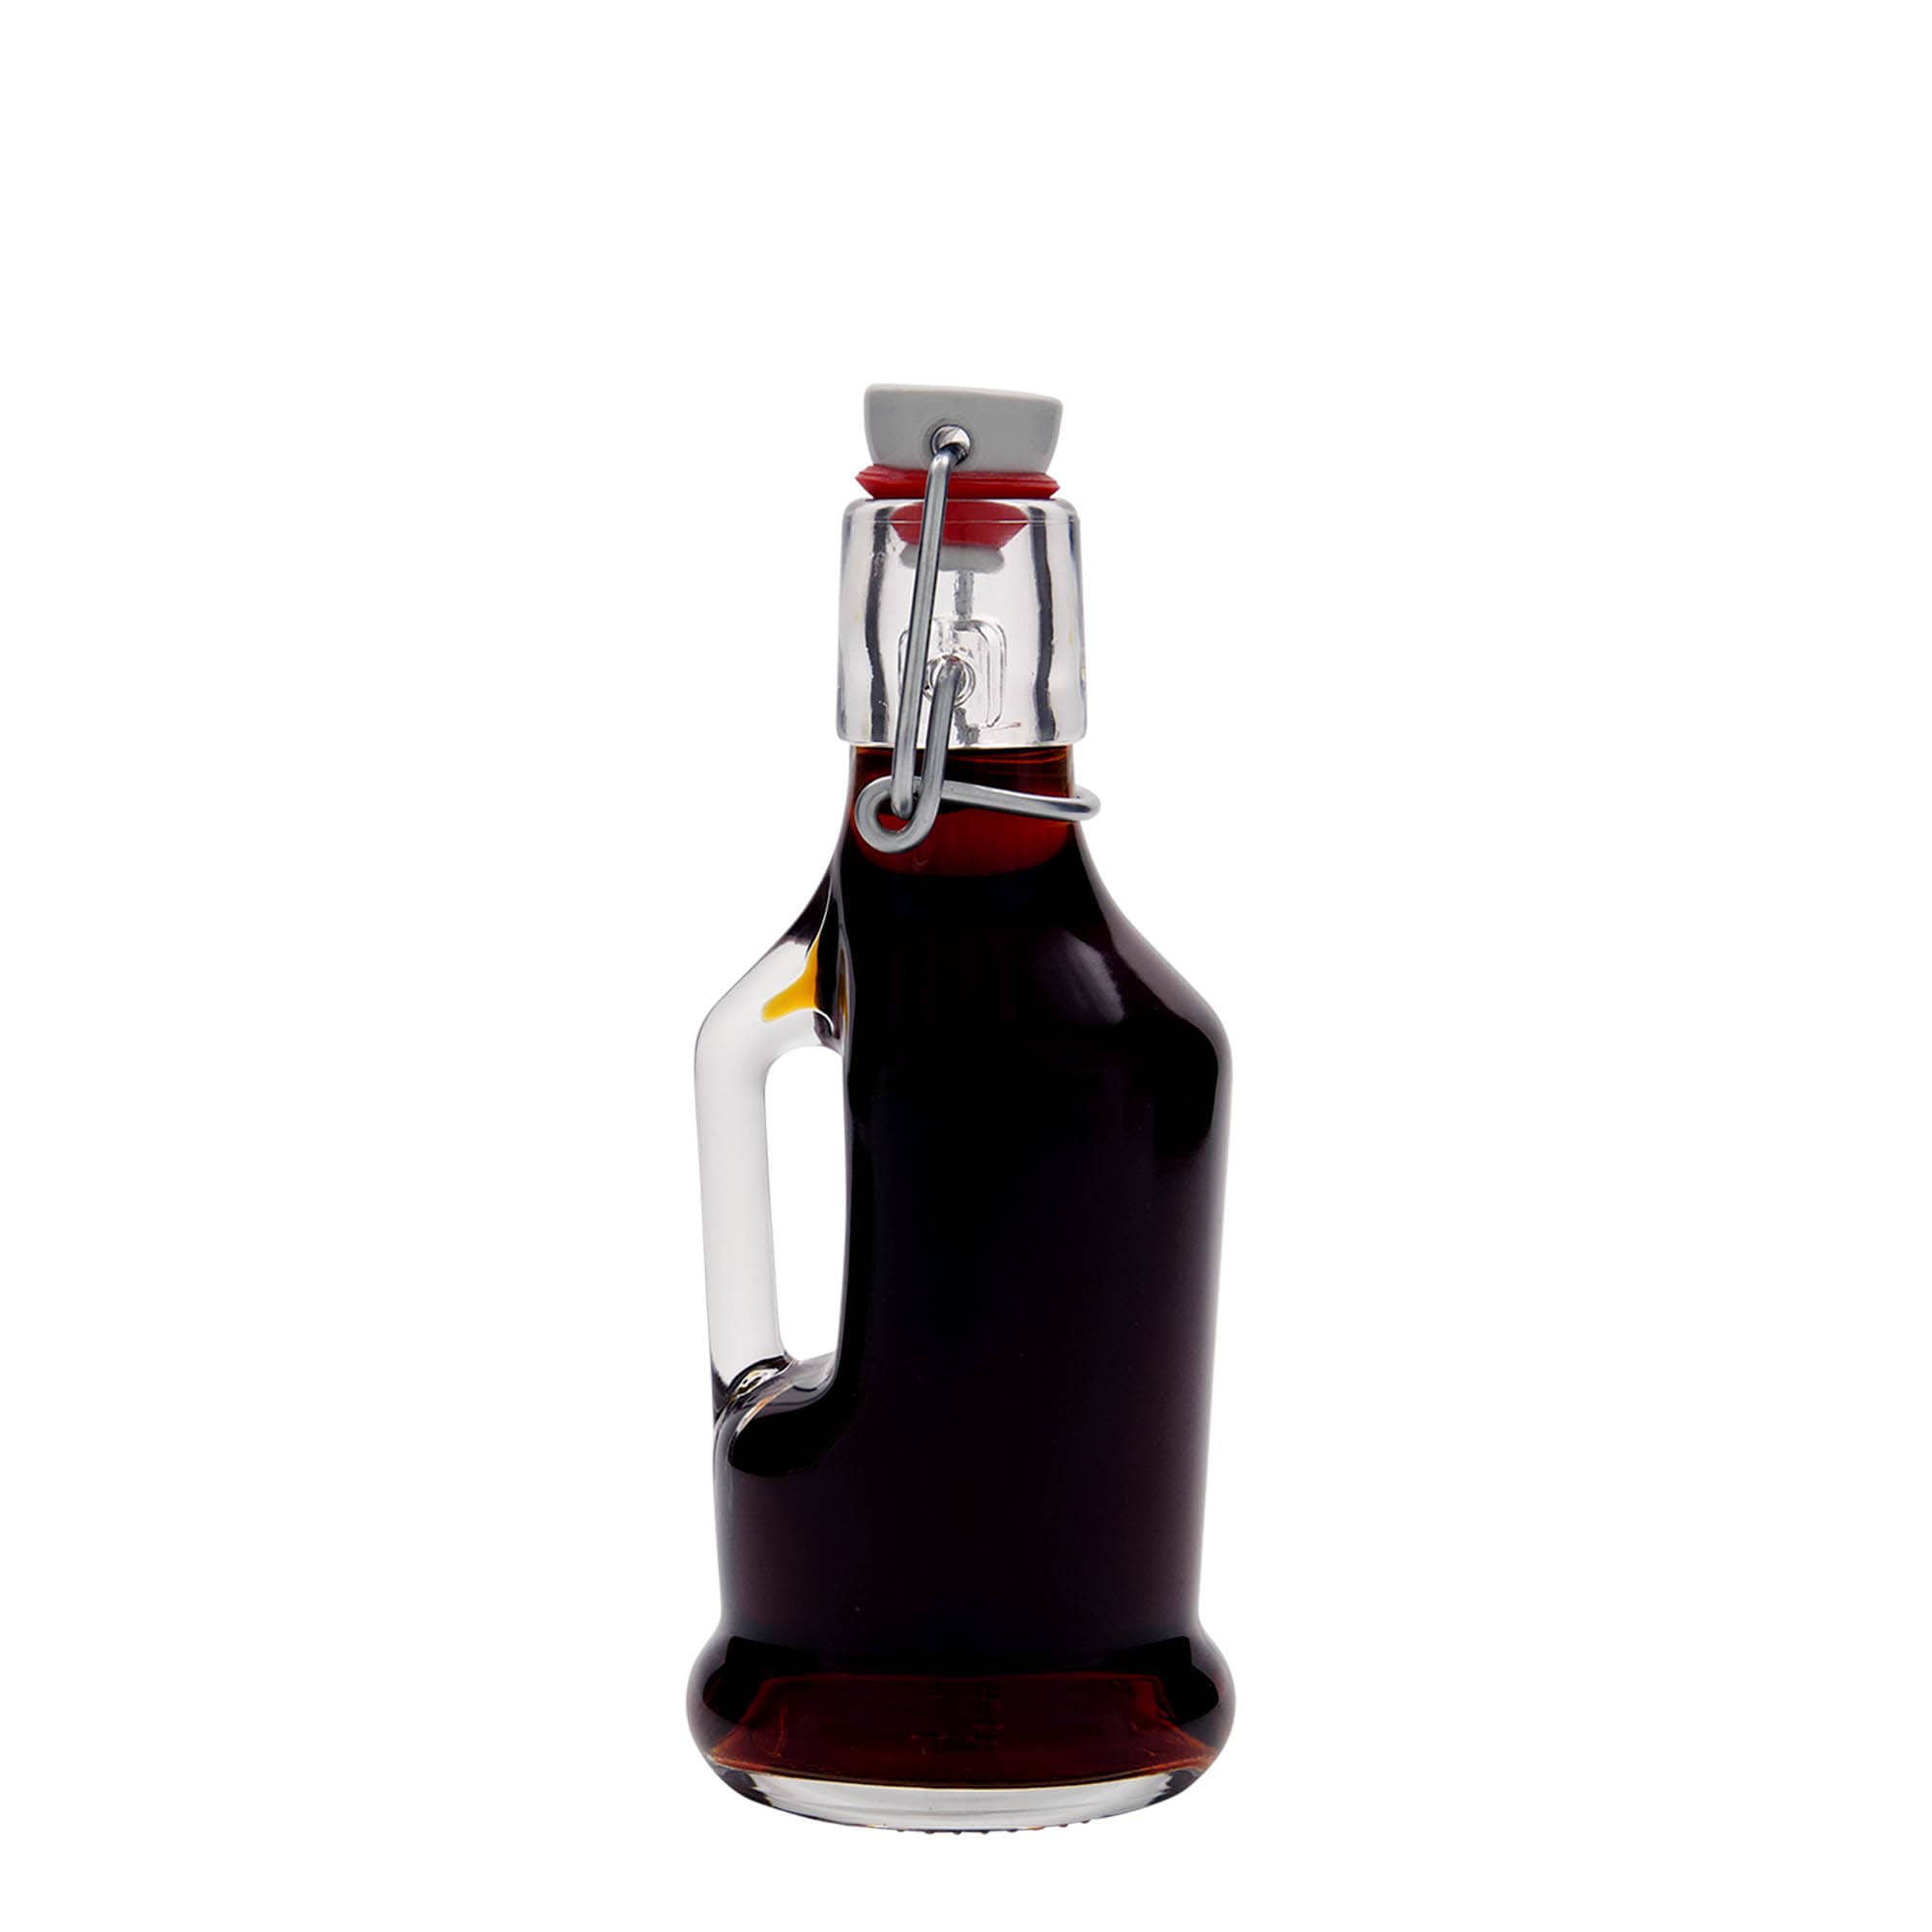 200 ml glass bottle 'Classica', closure: swing top